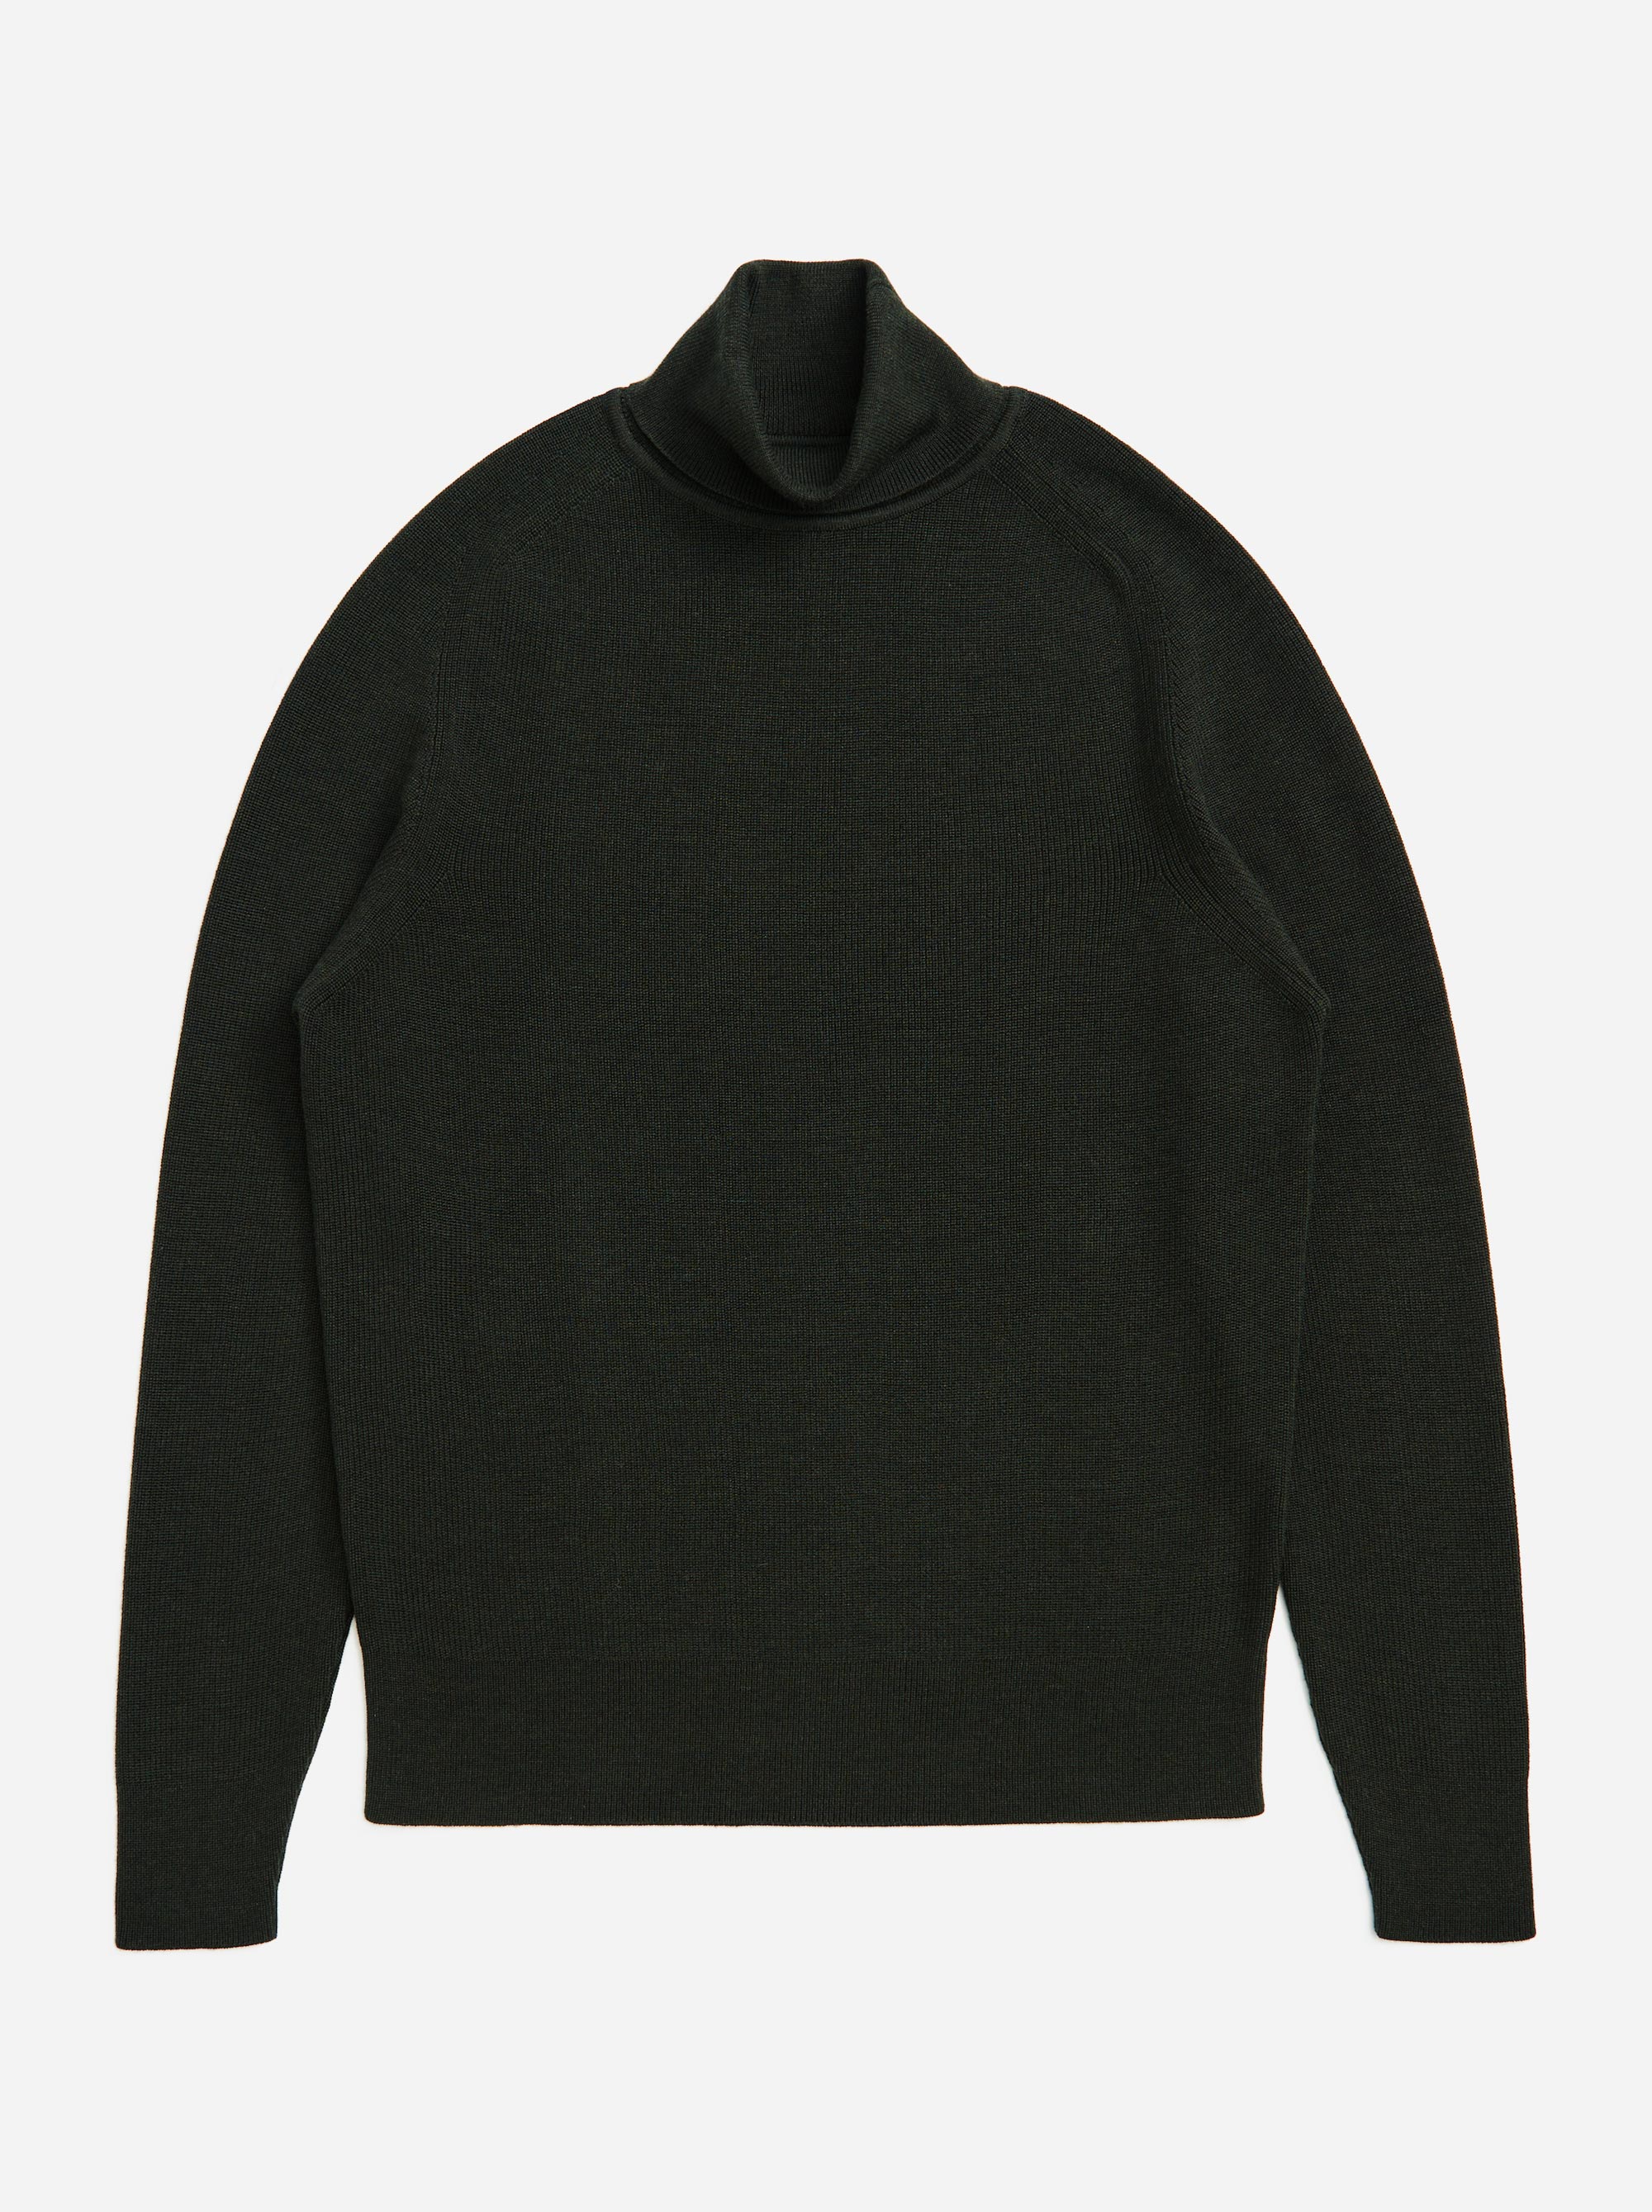 Teym - Turtleneck - The Merino Sweater - Men - Green - 5